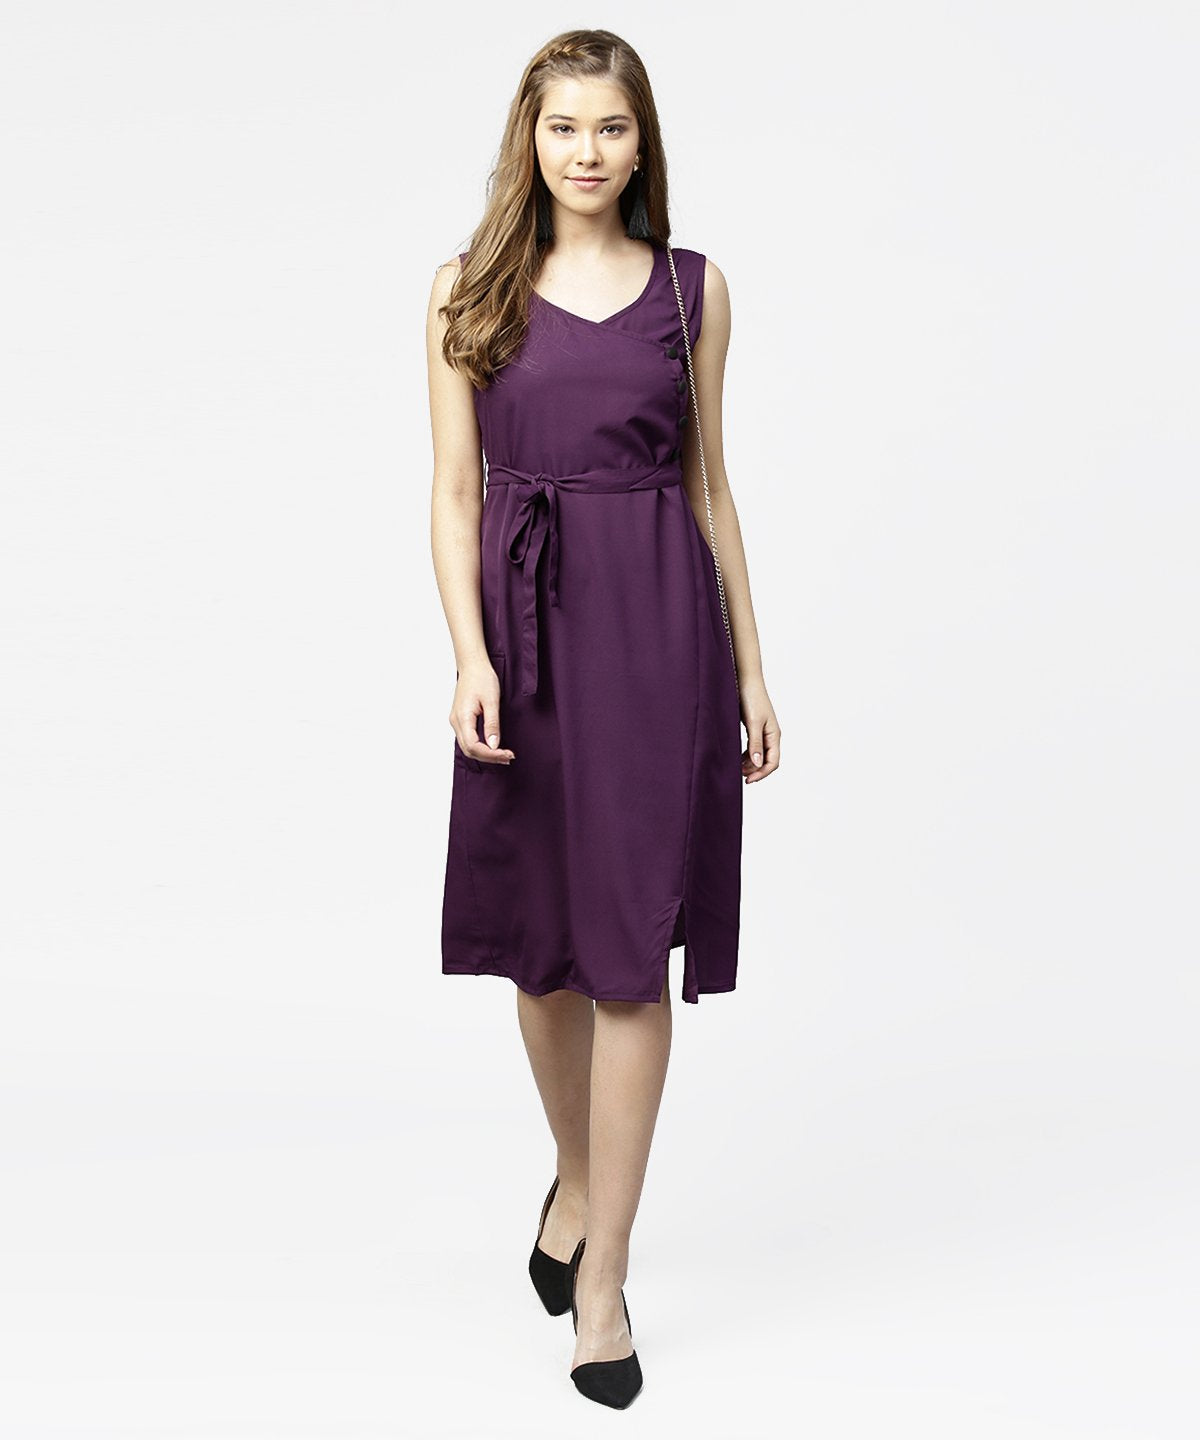 Women's Purple Sleeveless A-Line Dress With Belt - Nayo Clothing